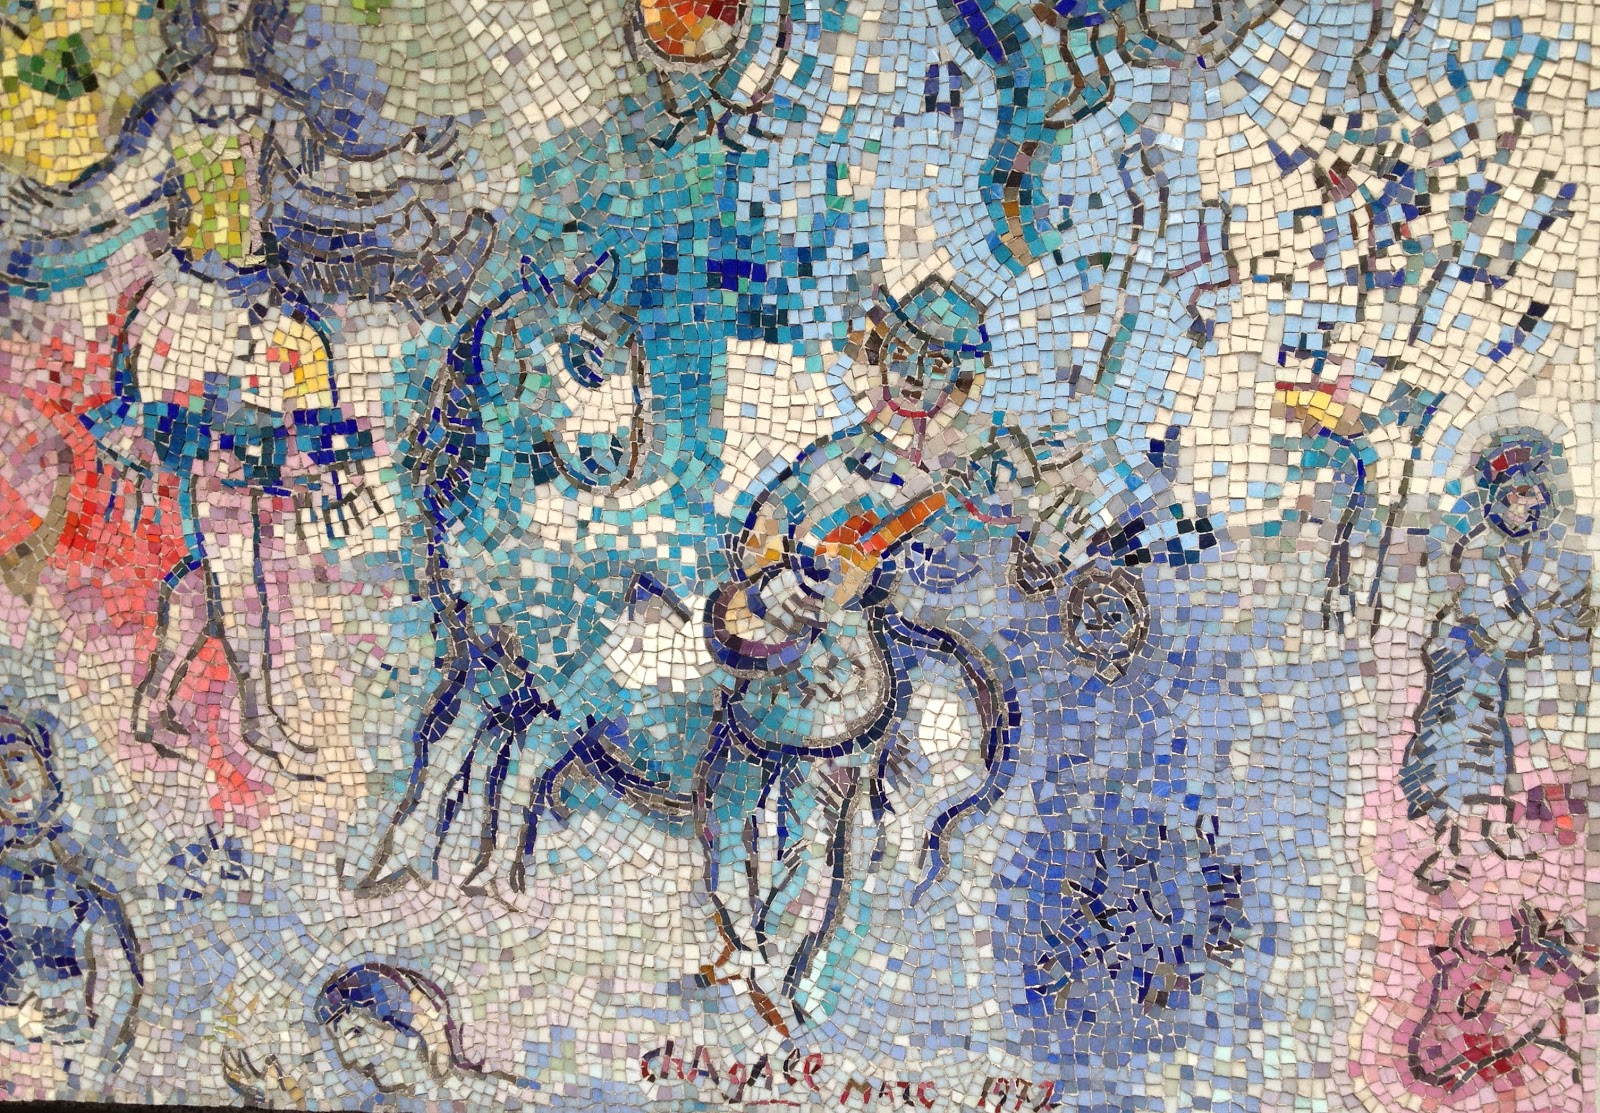 Marc+Chagall-1887-1985 (13).jpg